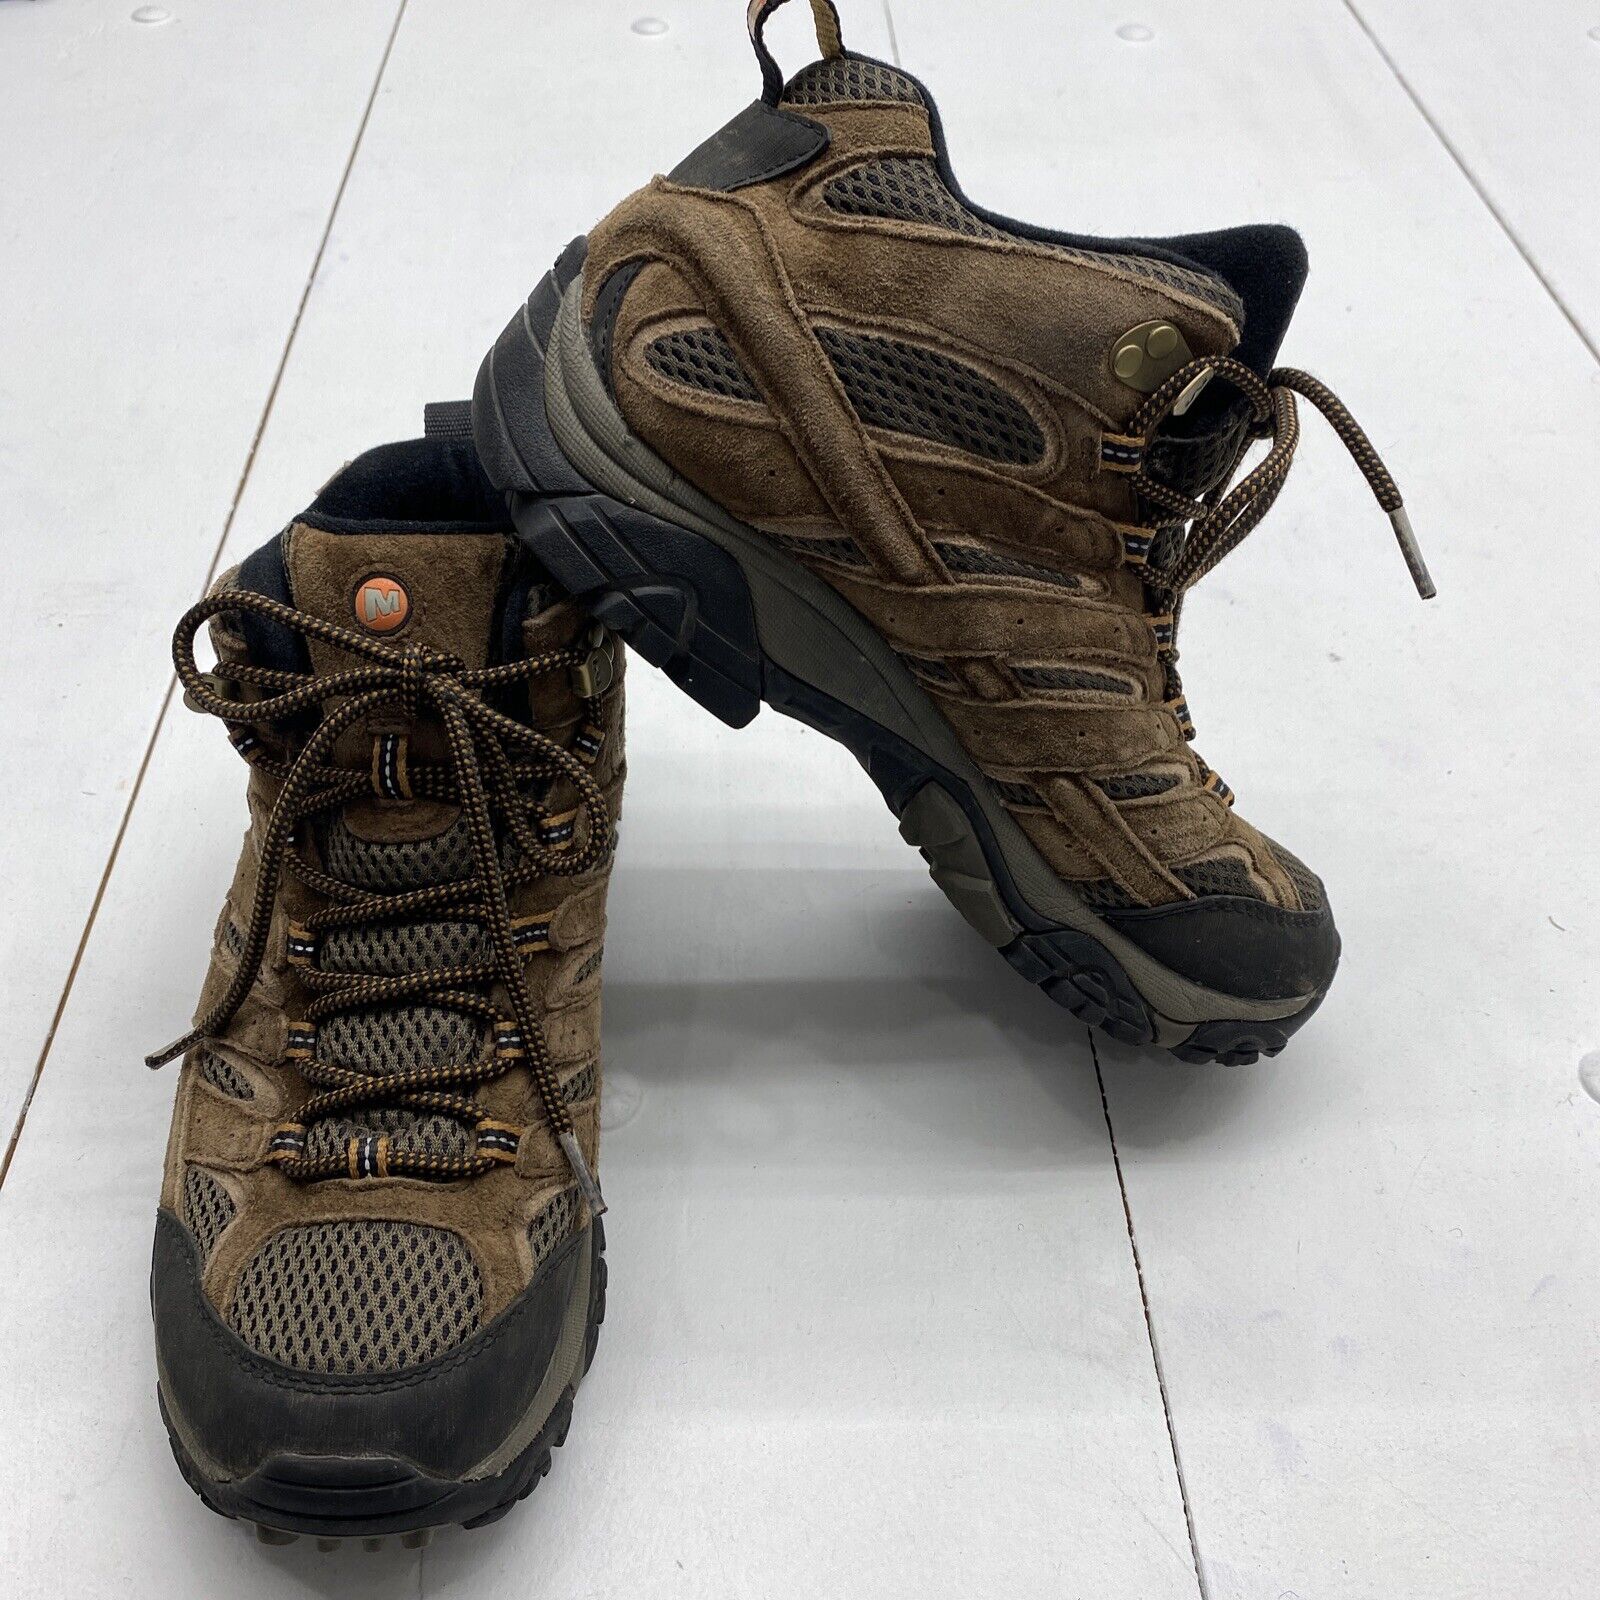 Merrell J06051 Moab 2 Mid Waterproof Wide Width Hiking Boots Mens Size 7